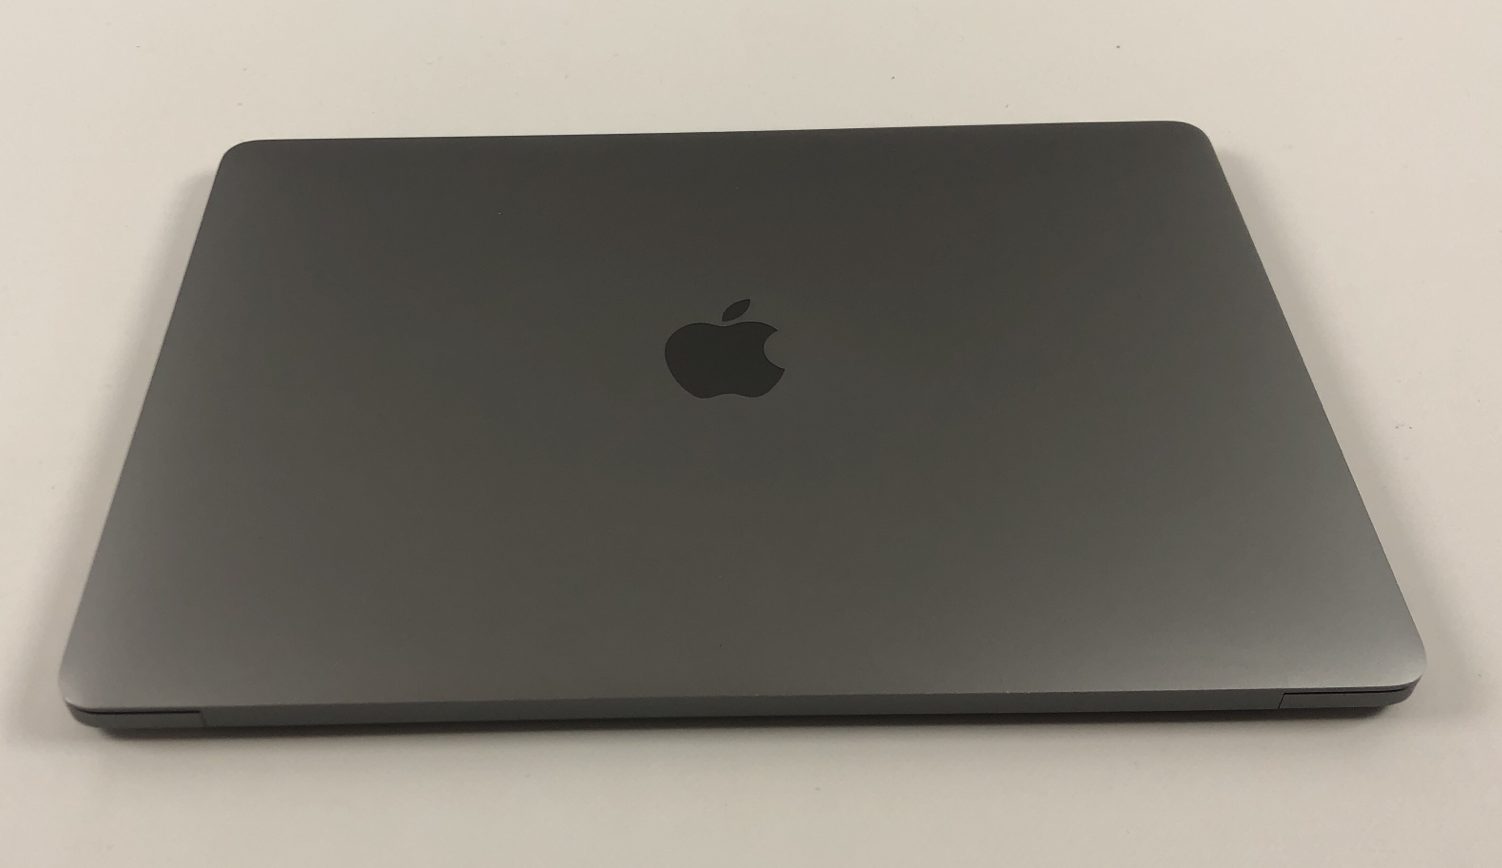 mac pro 2017 13 inch 3.1 ghz quad core